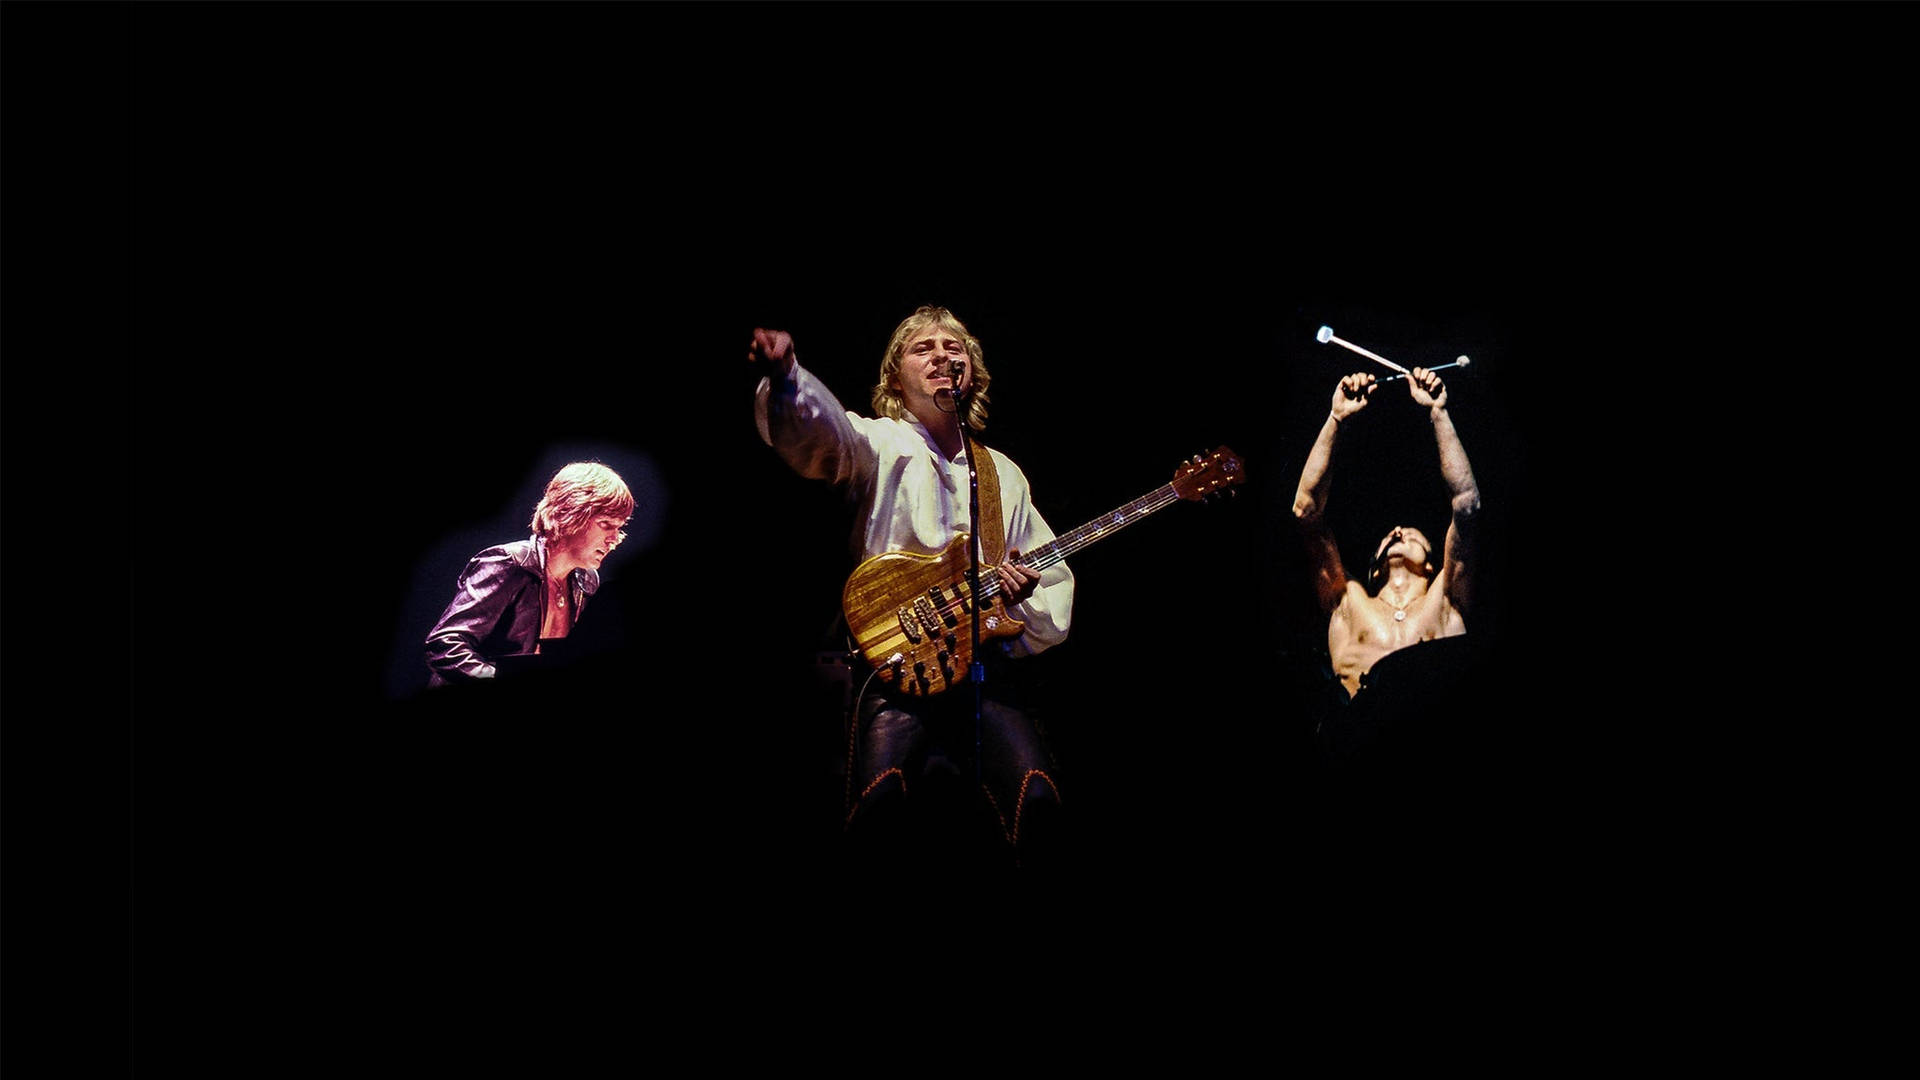 Emerson Lake&Palmer Concert Cover Wallpaper